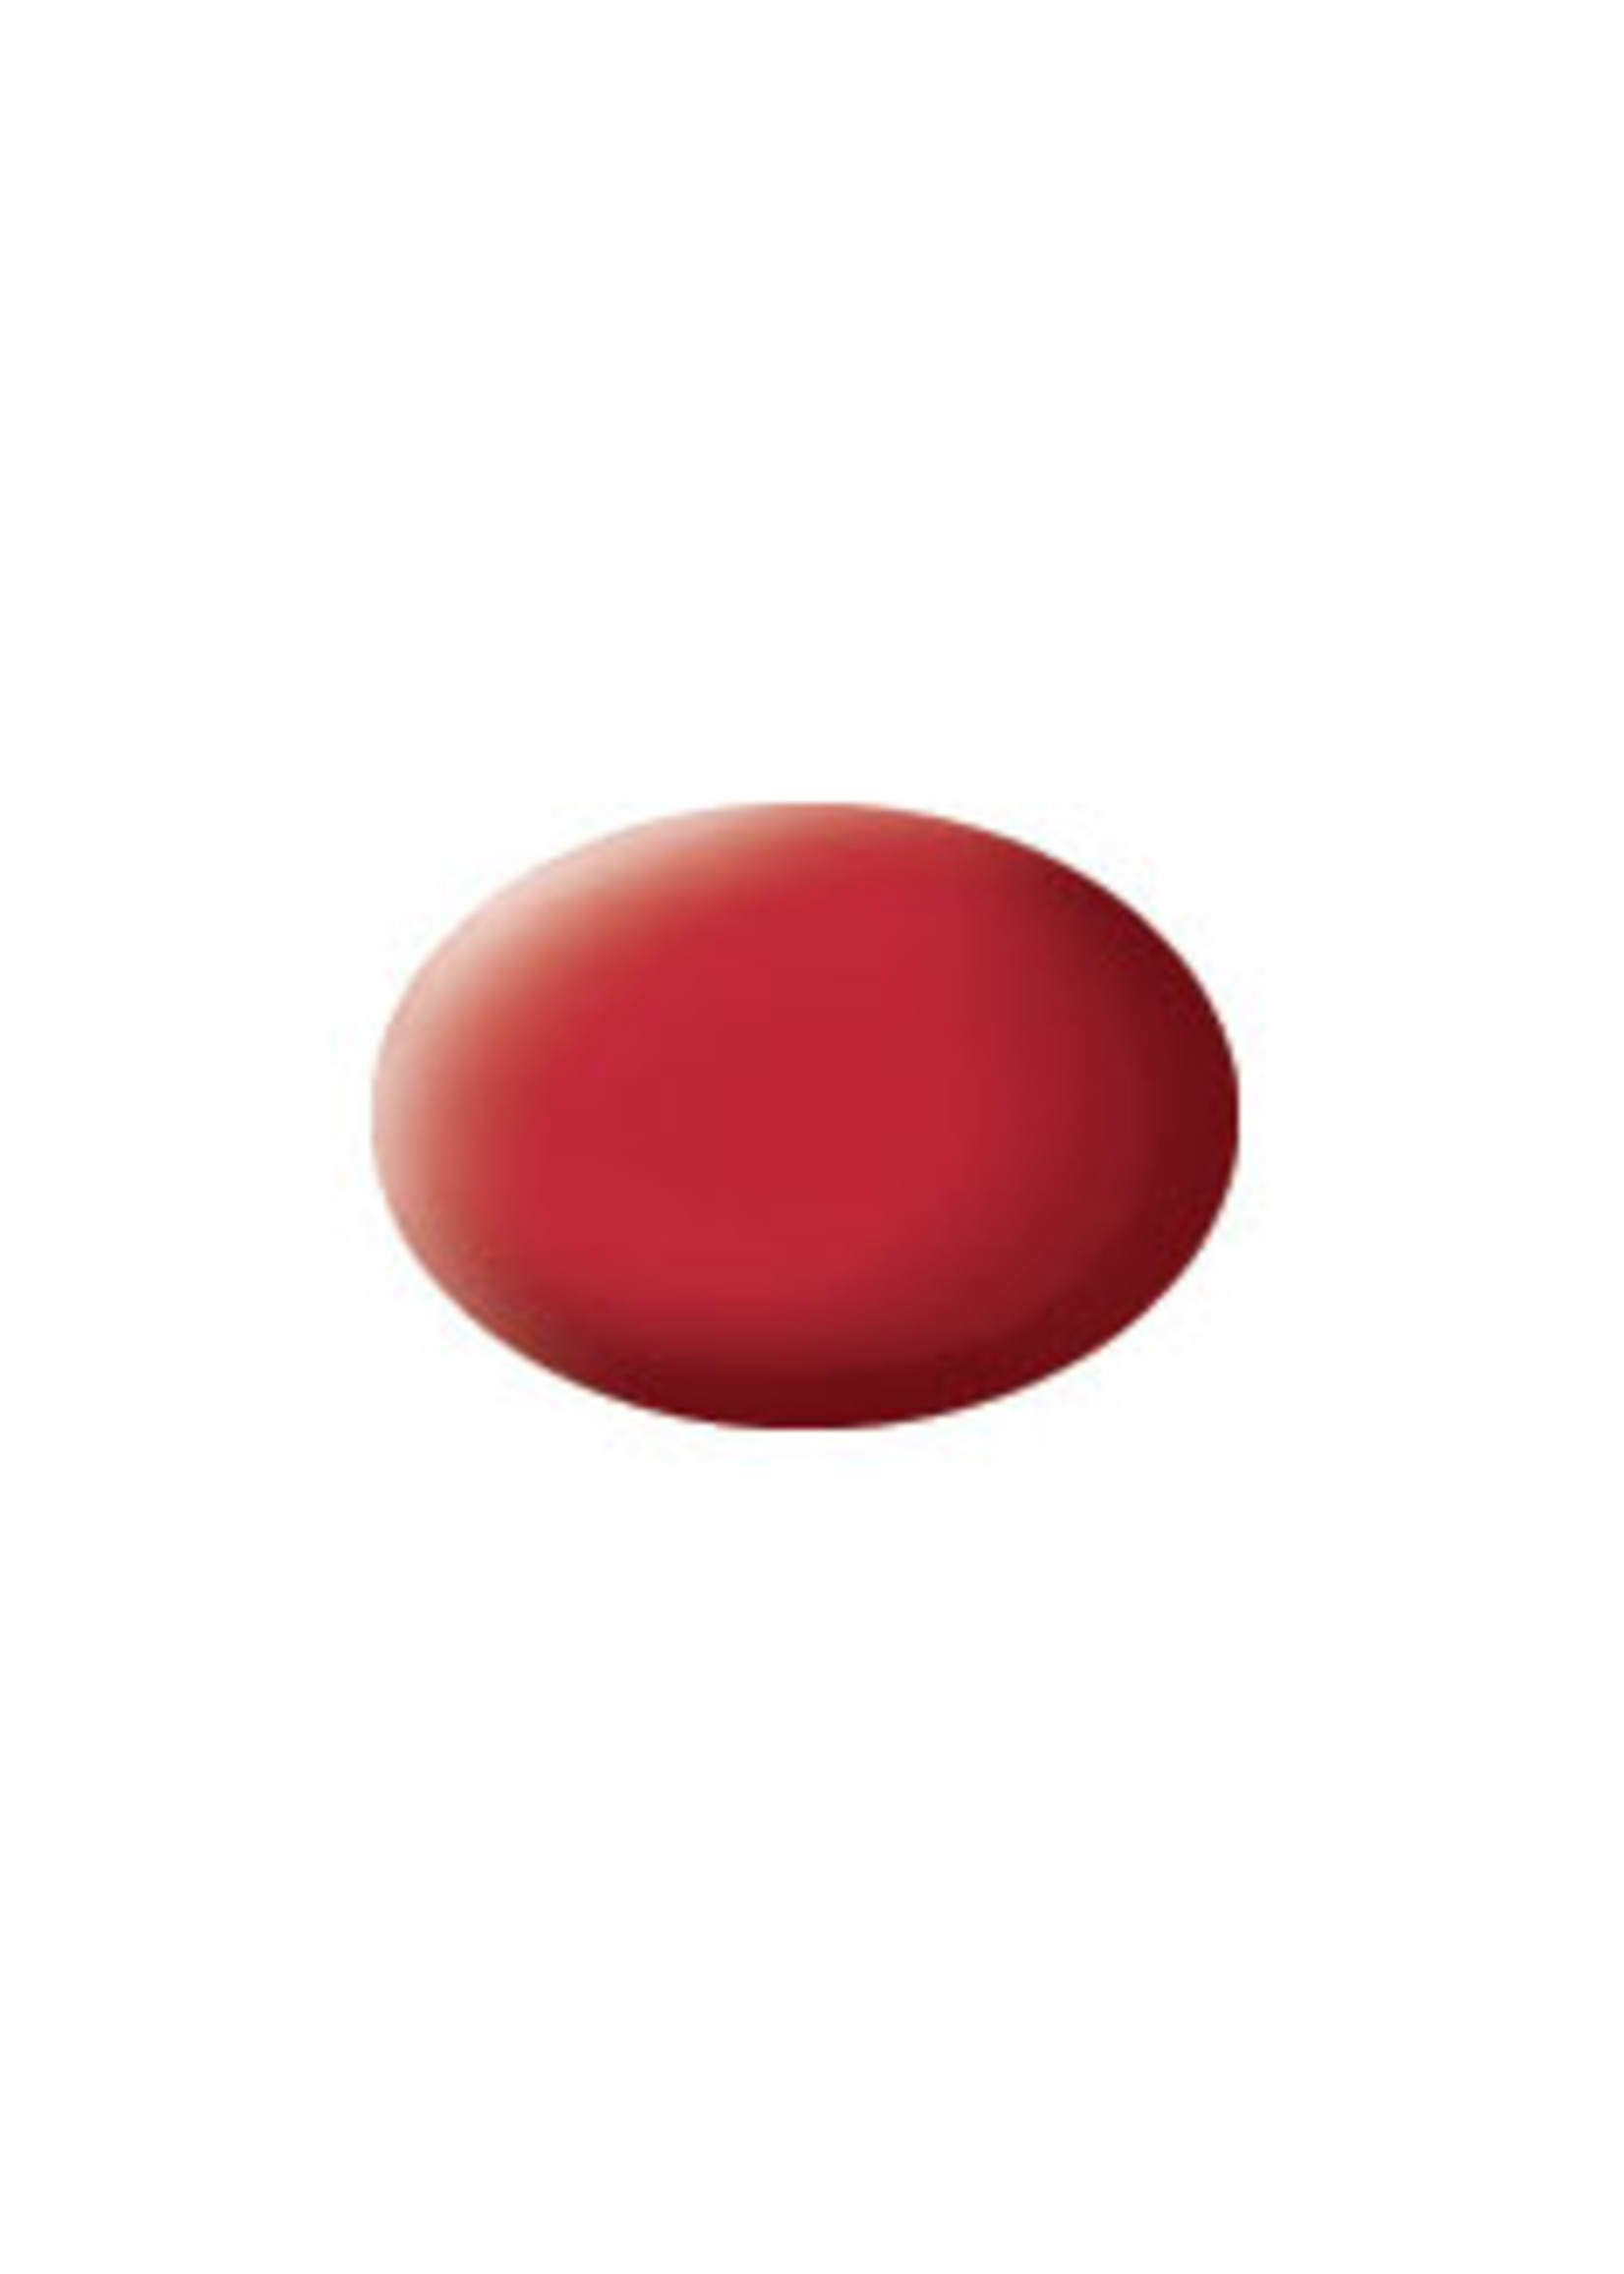 Revell 36136 - Aqua Carmine Red Matt 18ml - Hub Hobby